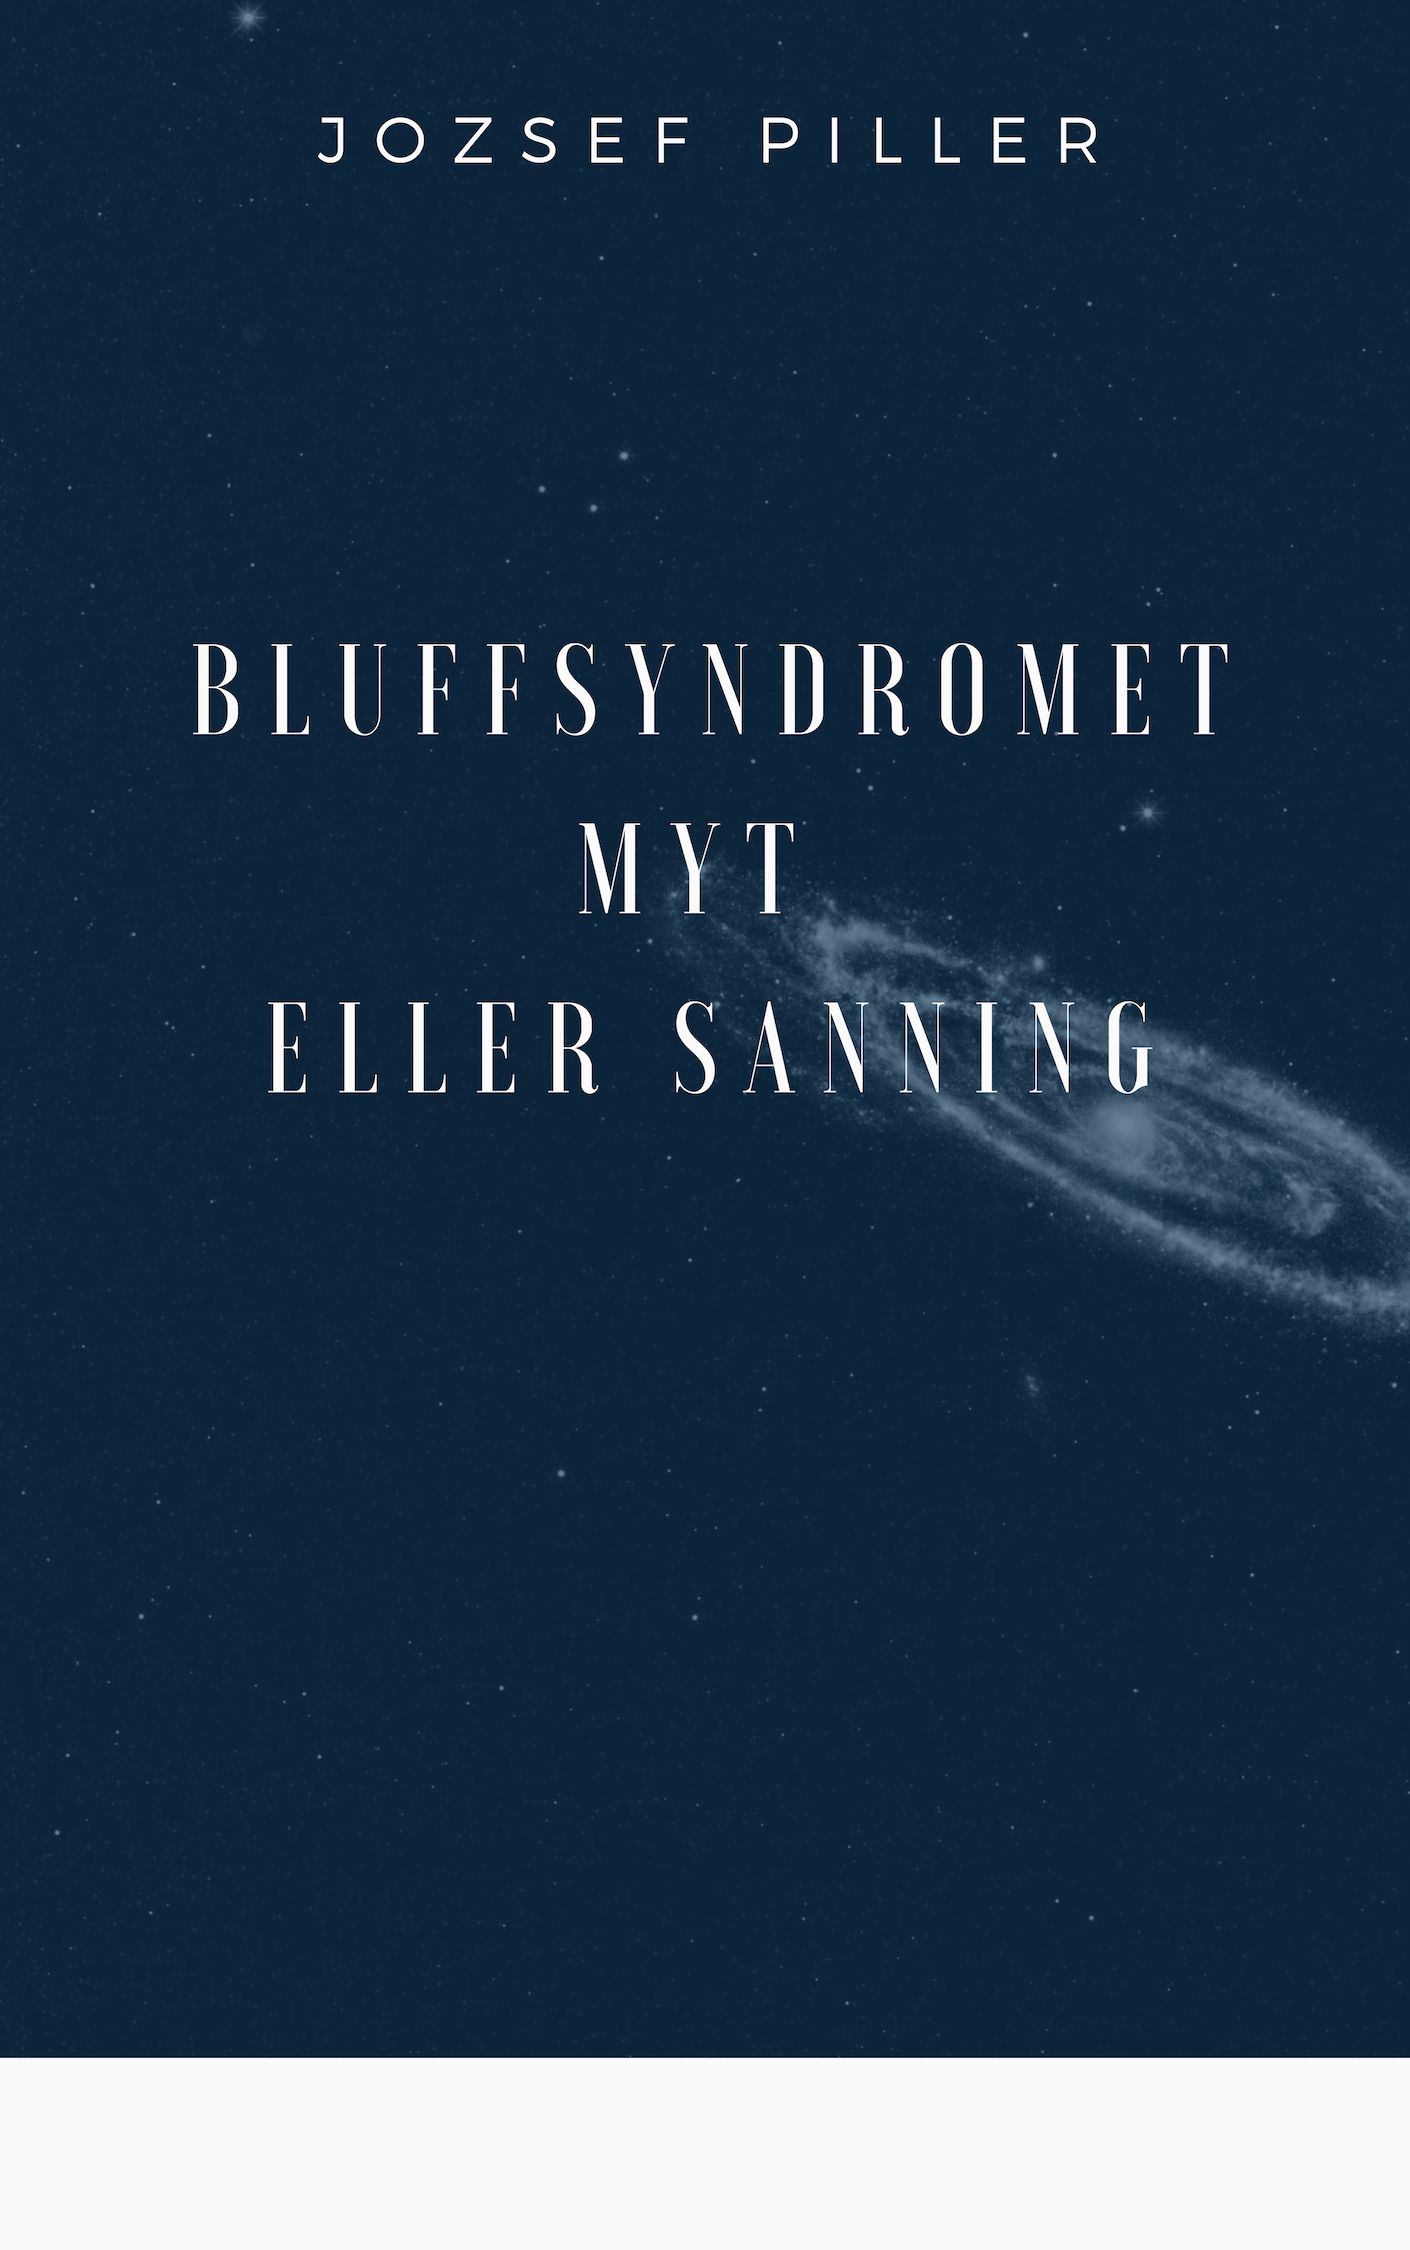 Bluffsyndromet - Myt eller sanning, audiobook by Jozsef Piller